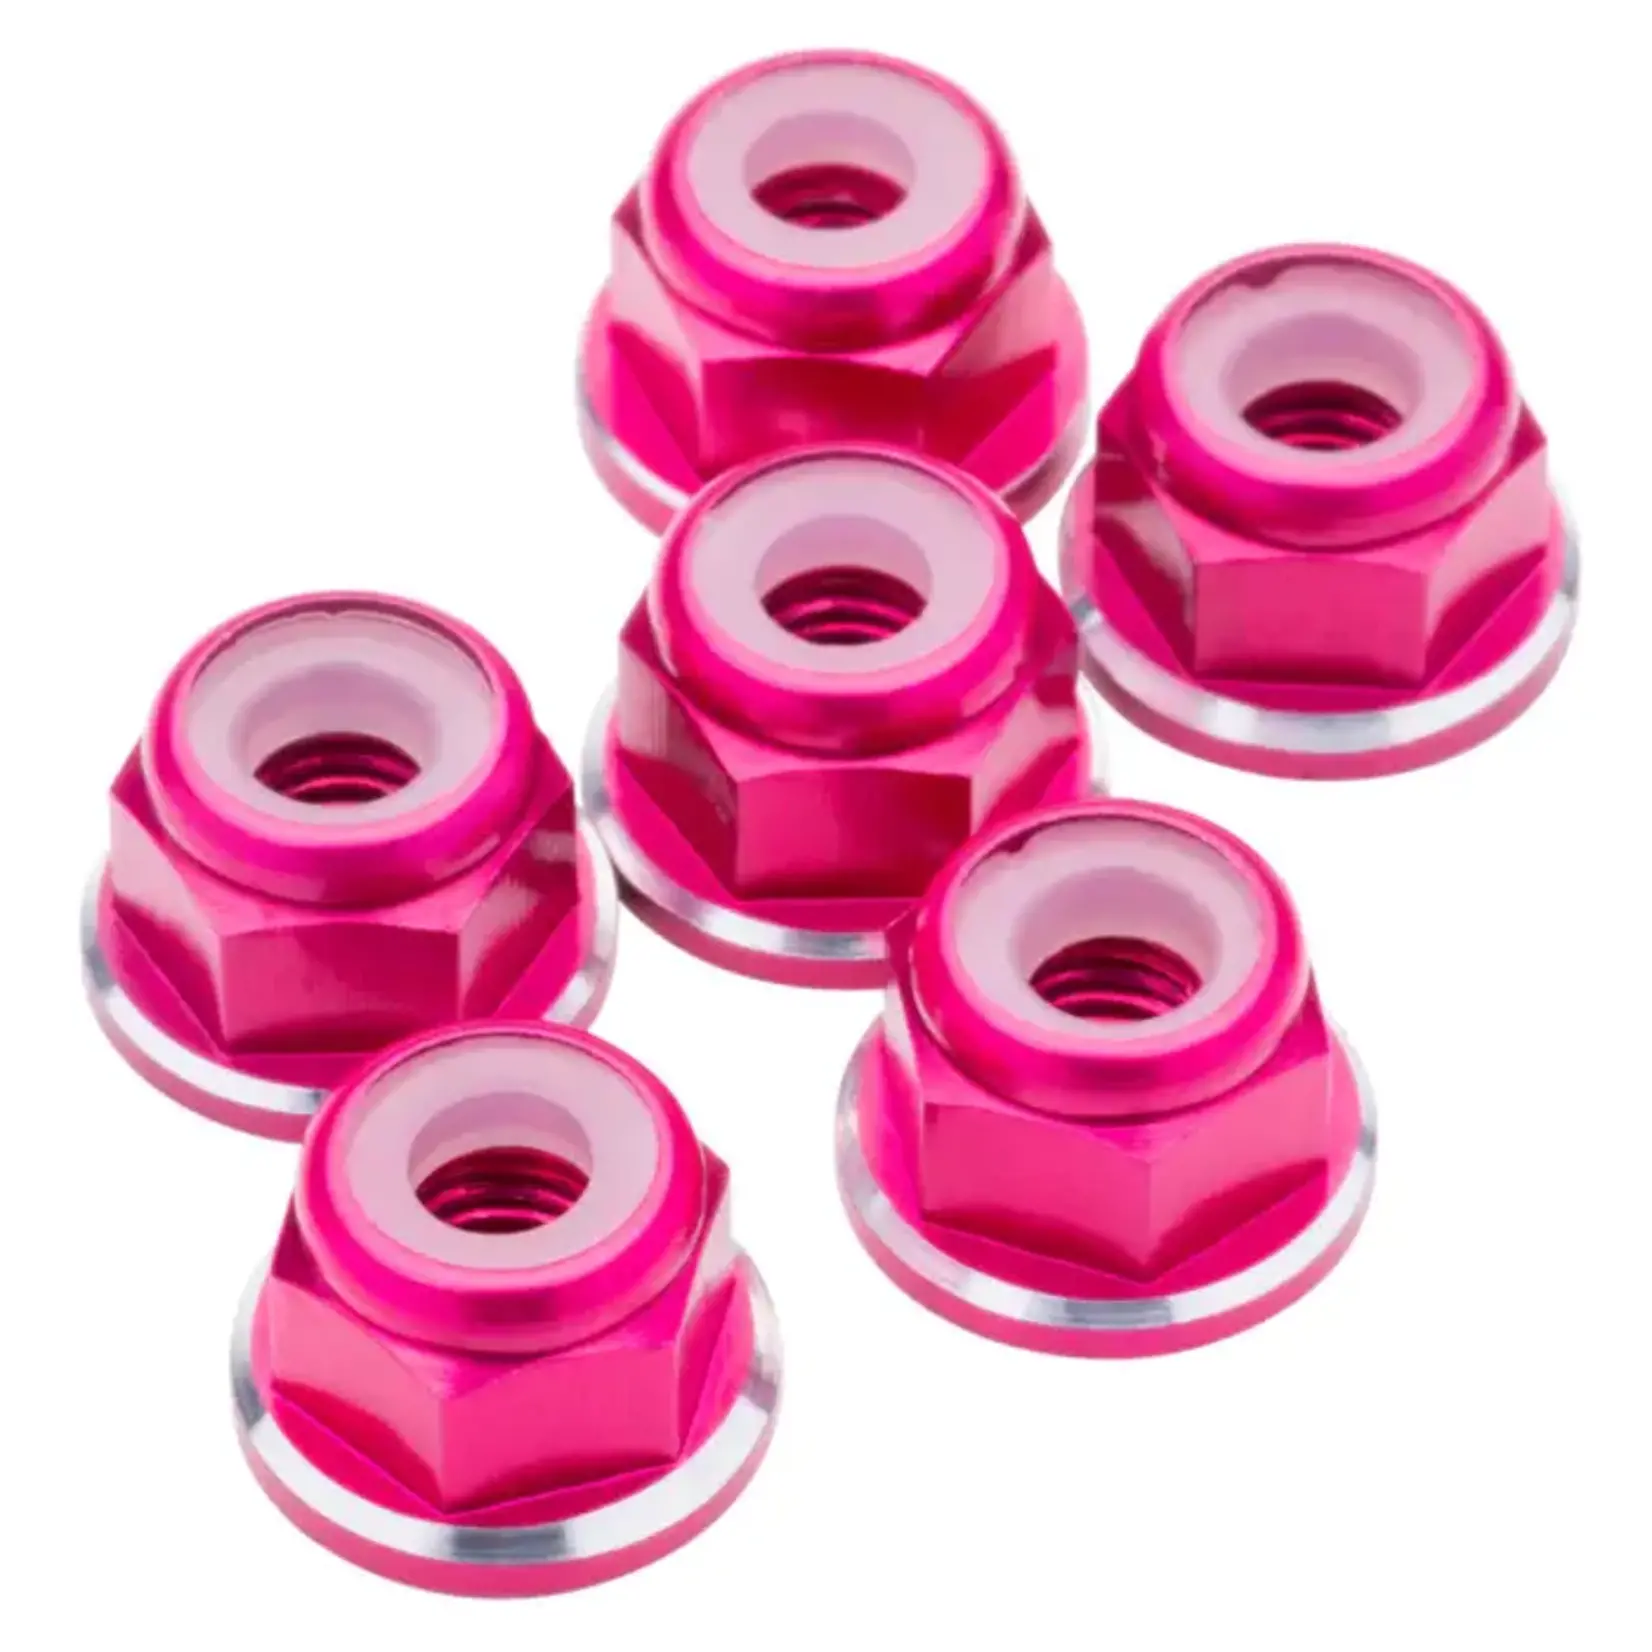 1UP 1UP 7075 Aluminum M3 Flanged Locknuts - Pink Shine - 6pcs